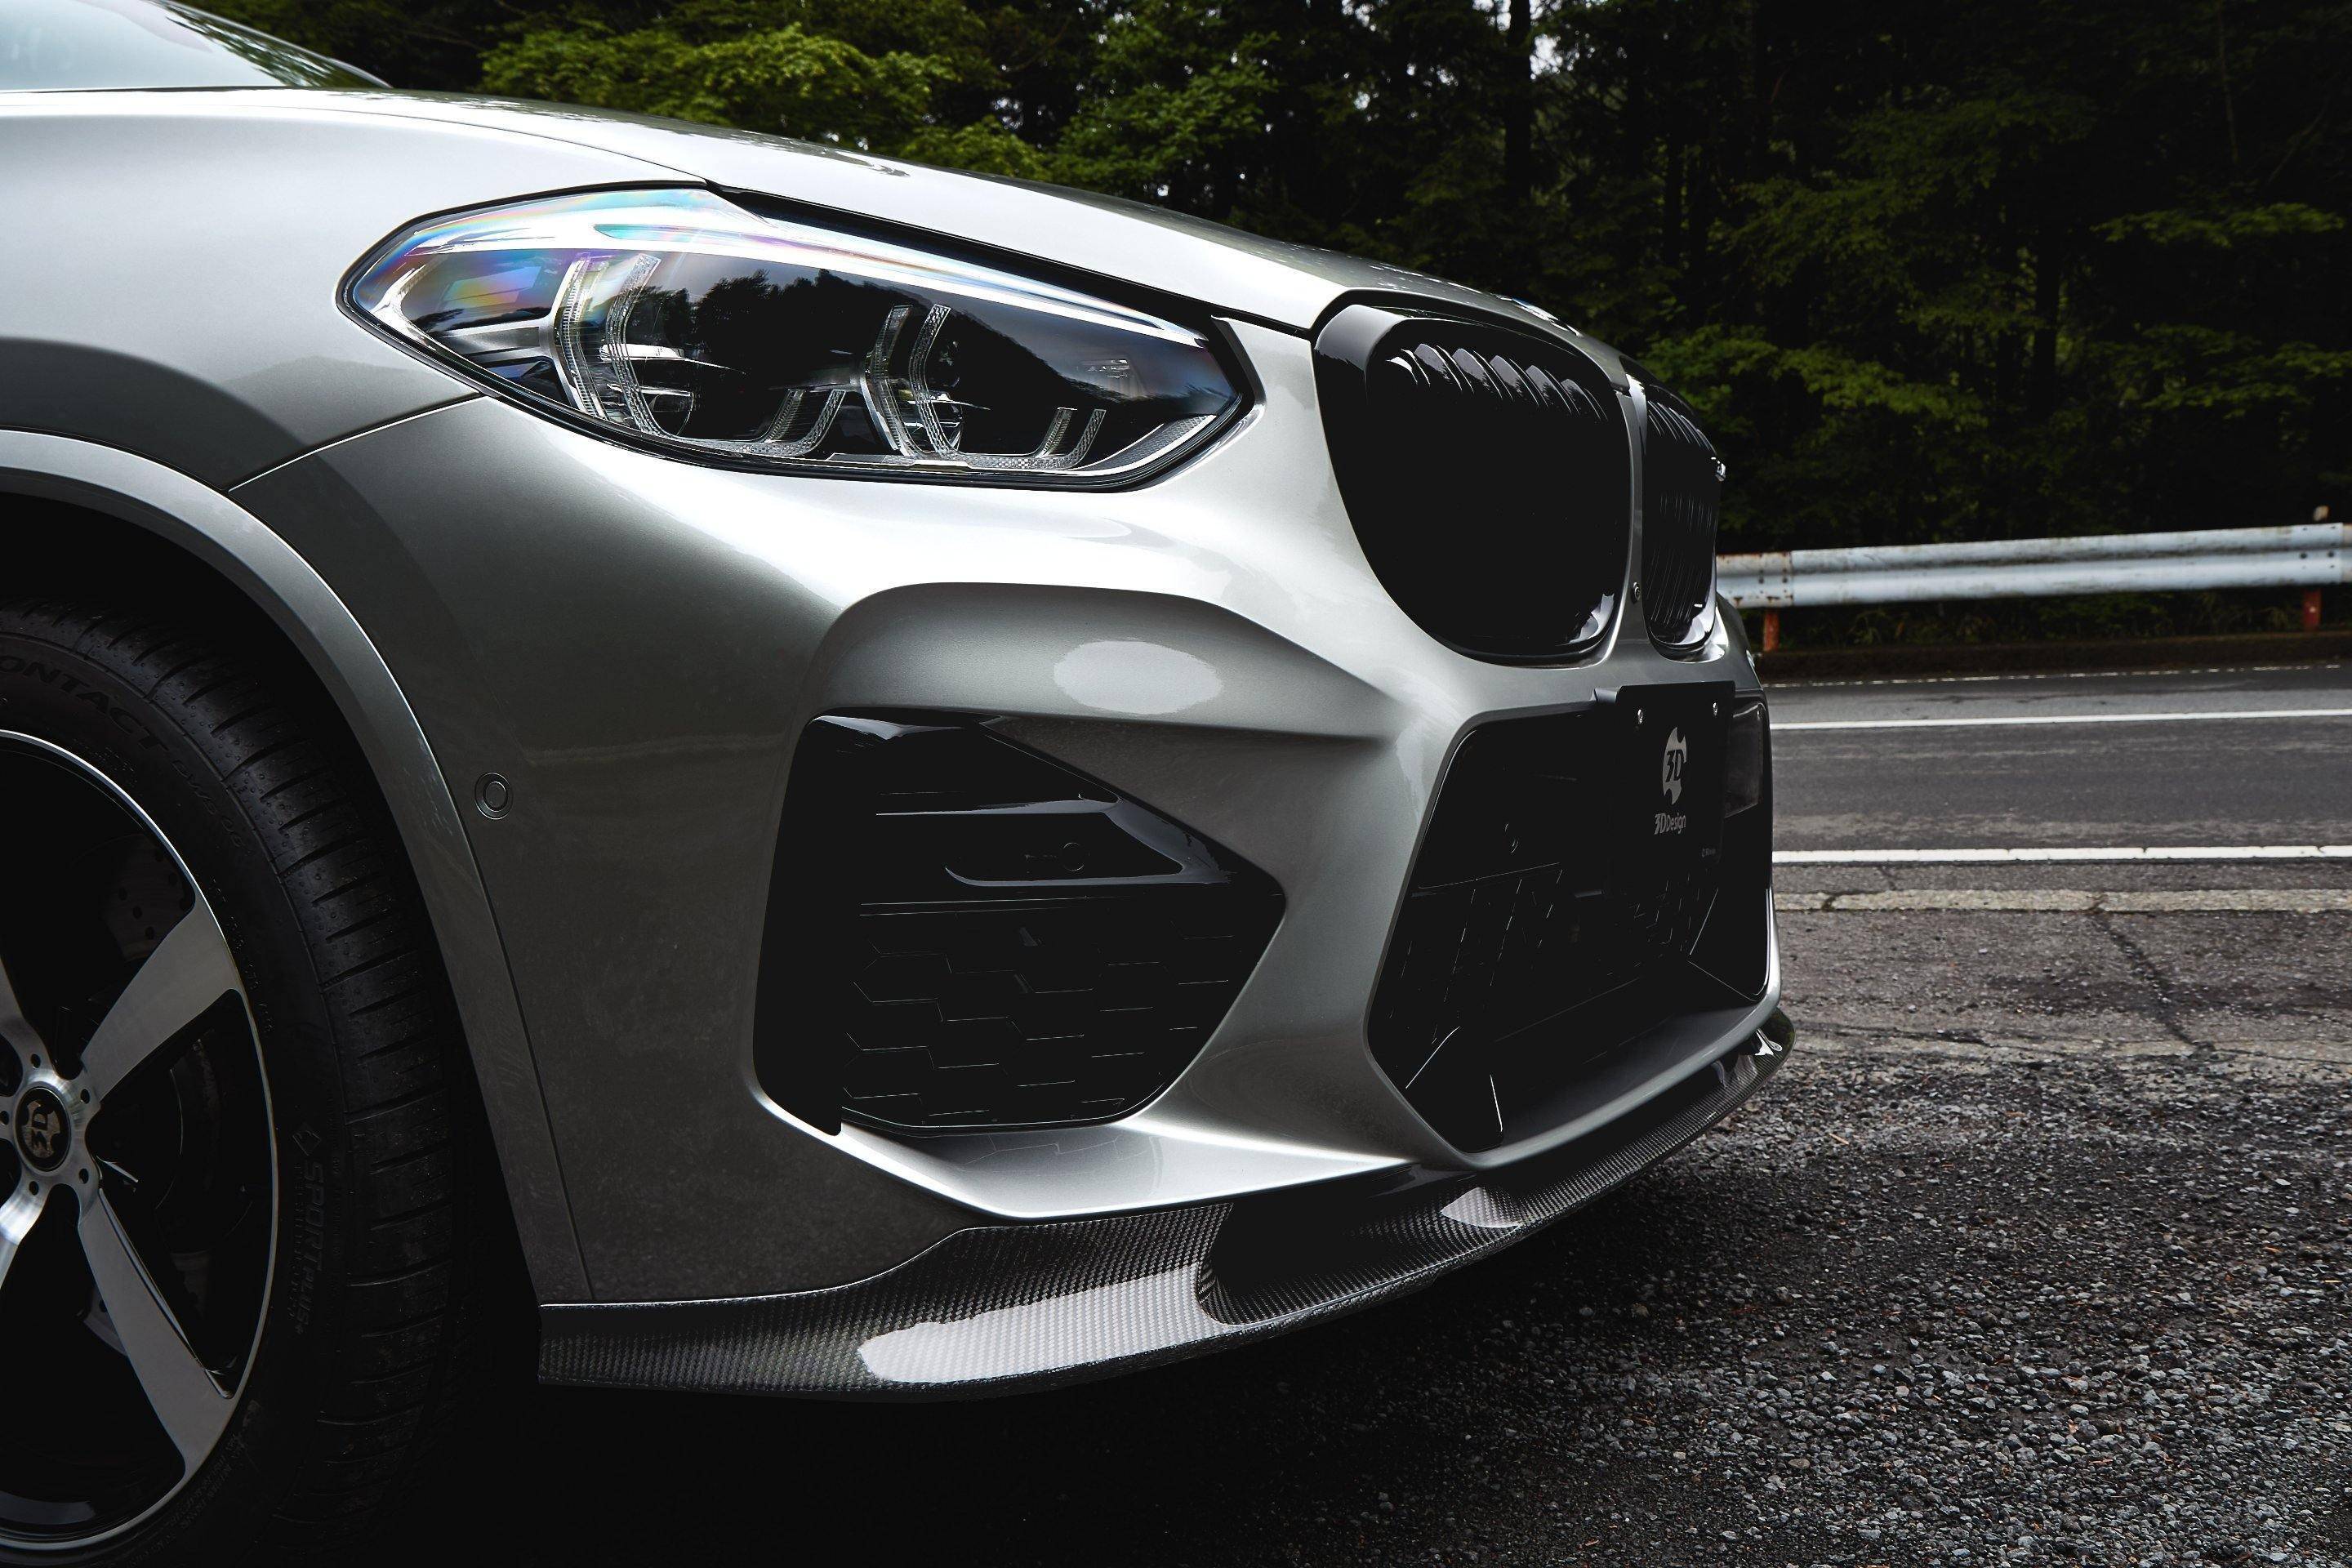 3DDesign Carbon Fibre Front Splitter for BMW X3M & X4M Pre-LCI (2019-2022, F97 F98), Front Lips & Splitters, 3DDesign - AUTOID | Premium Automotive Accessories